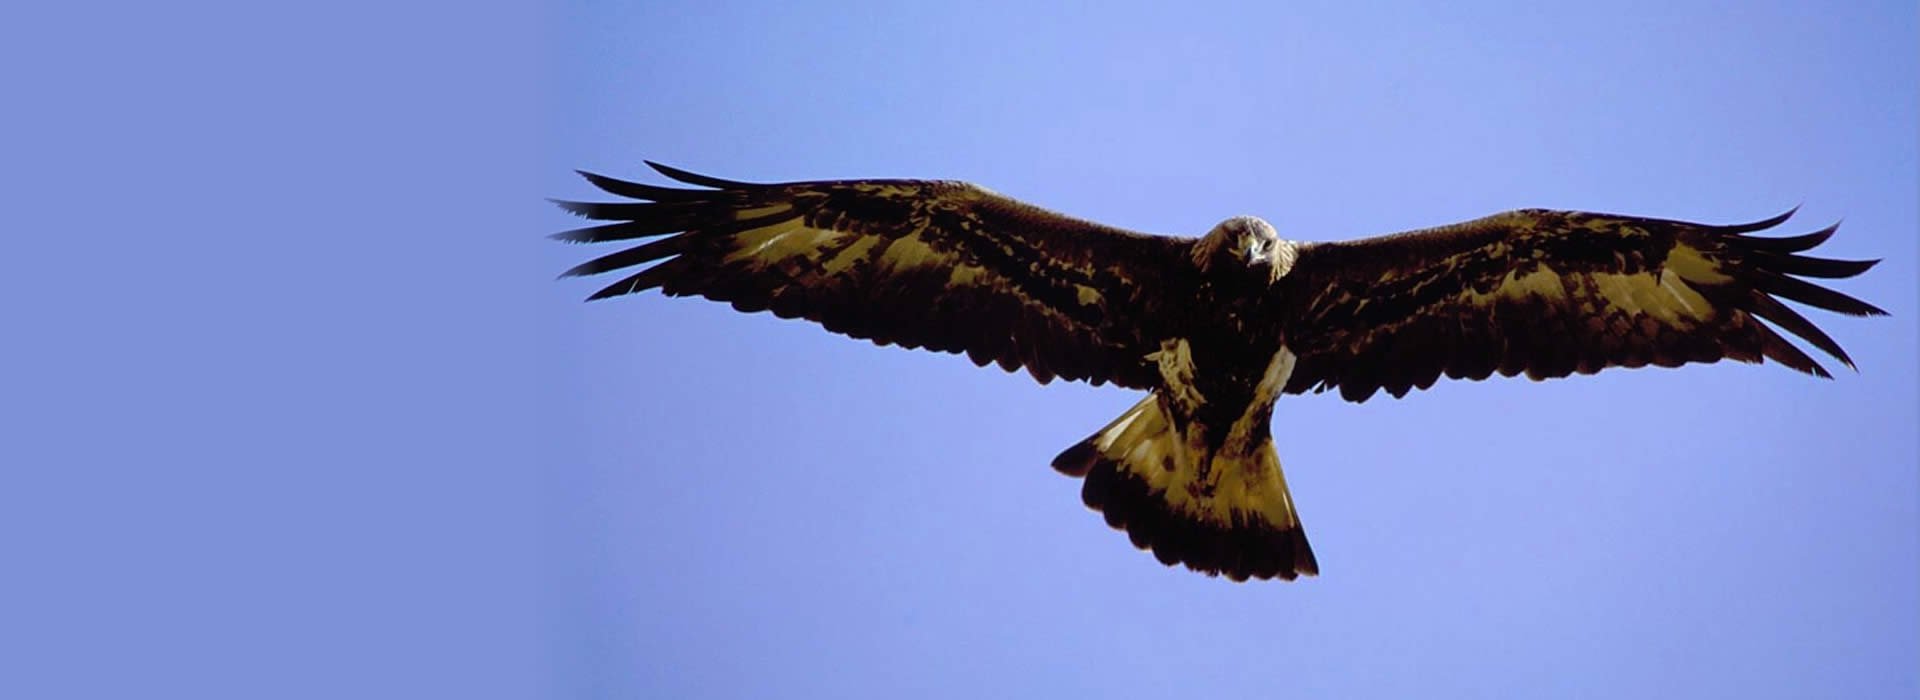 Close up of a soaring golden eagle